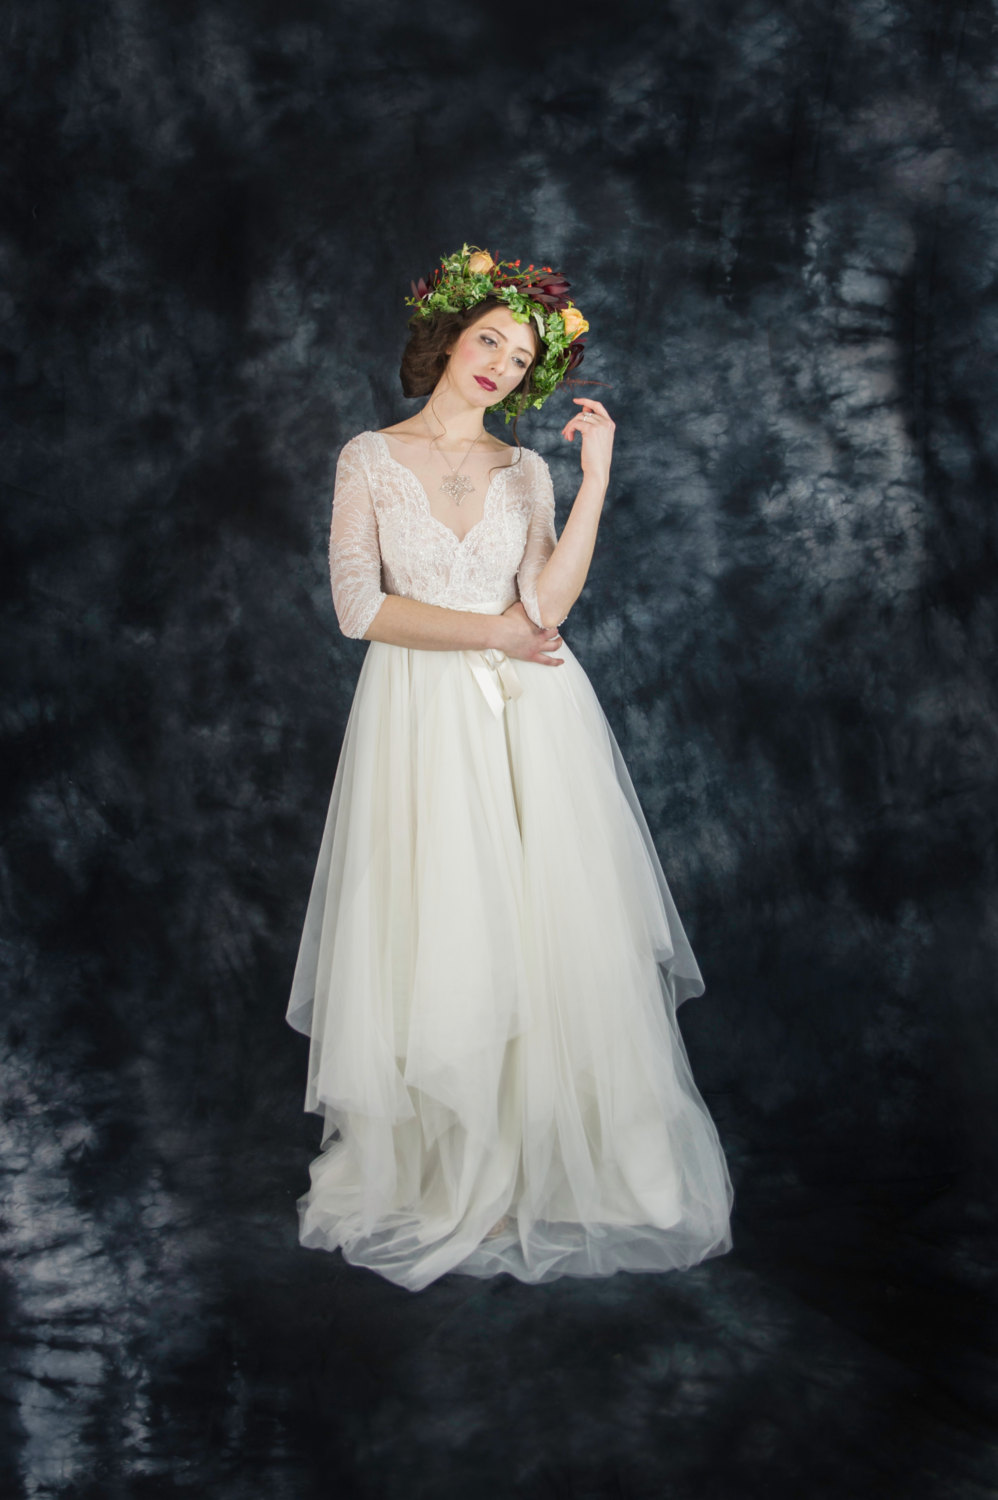 Lovely bohemian wedding dress